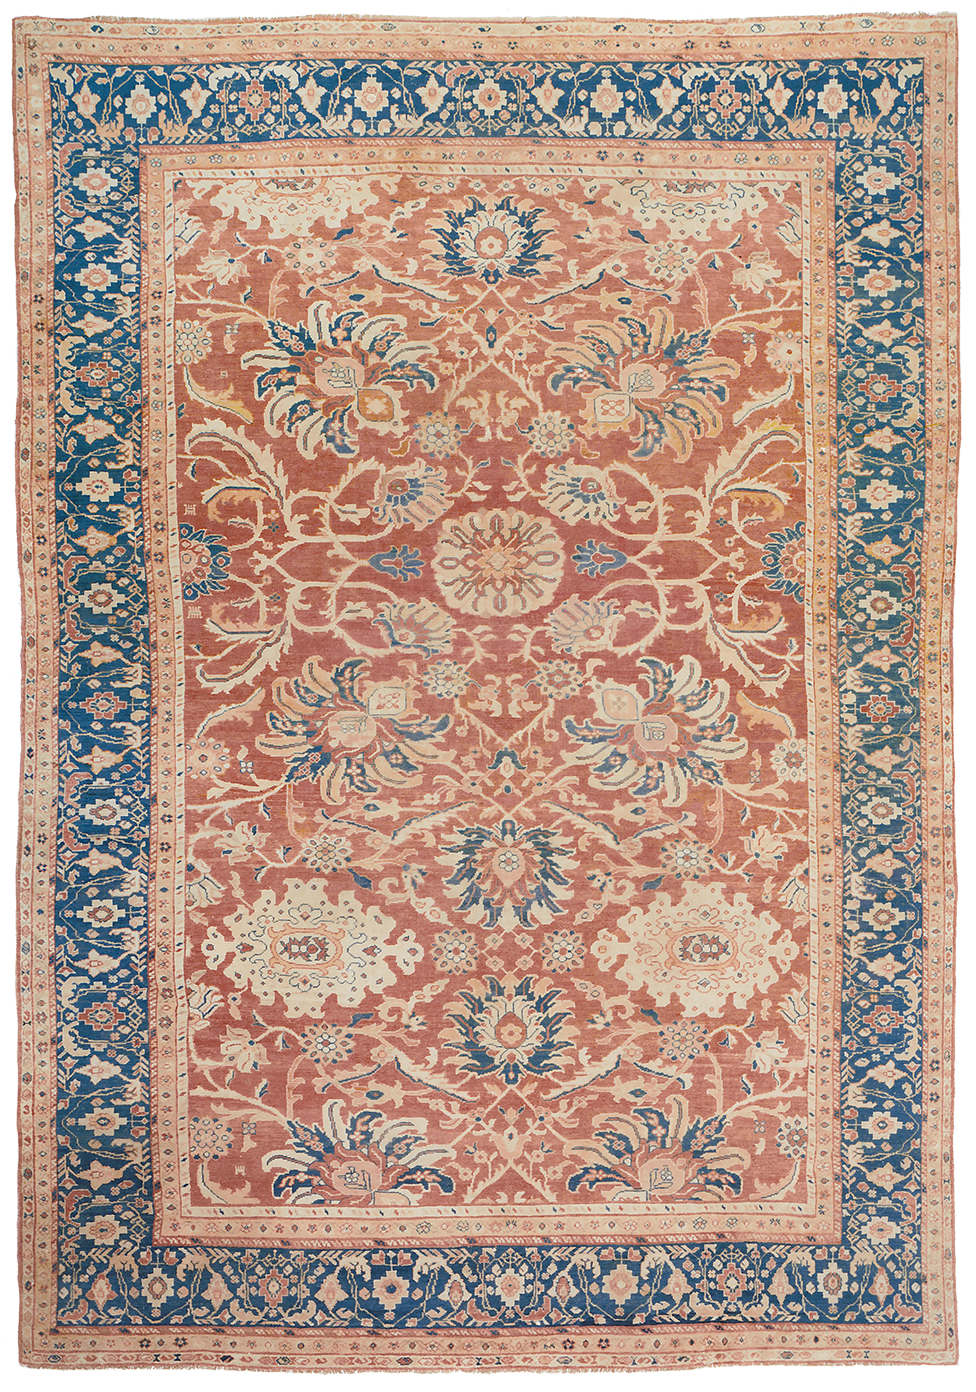 Early Ziegler Carpet